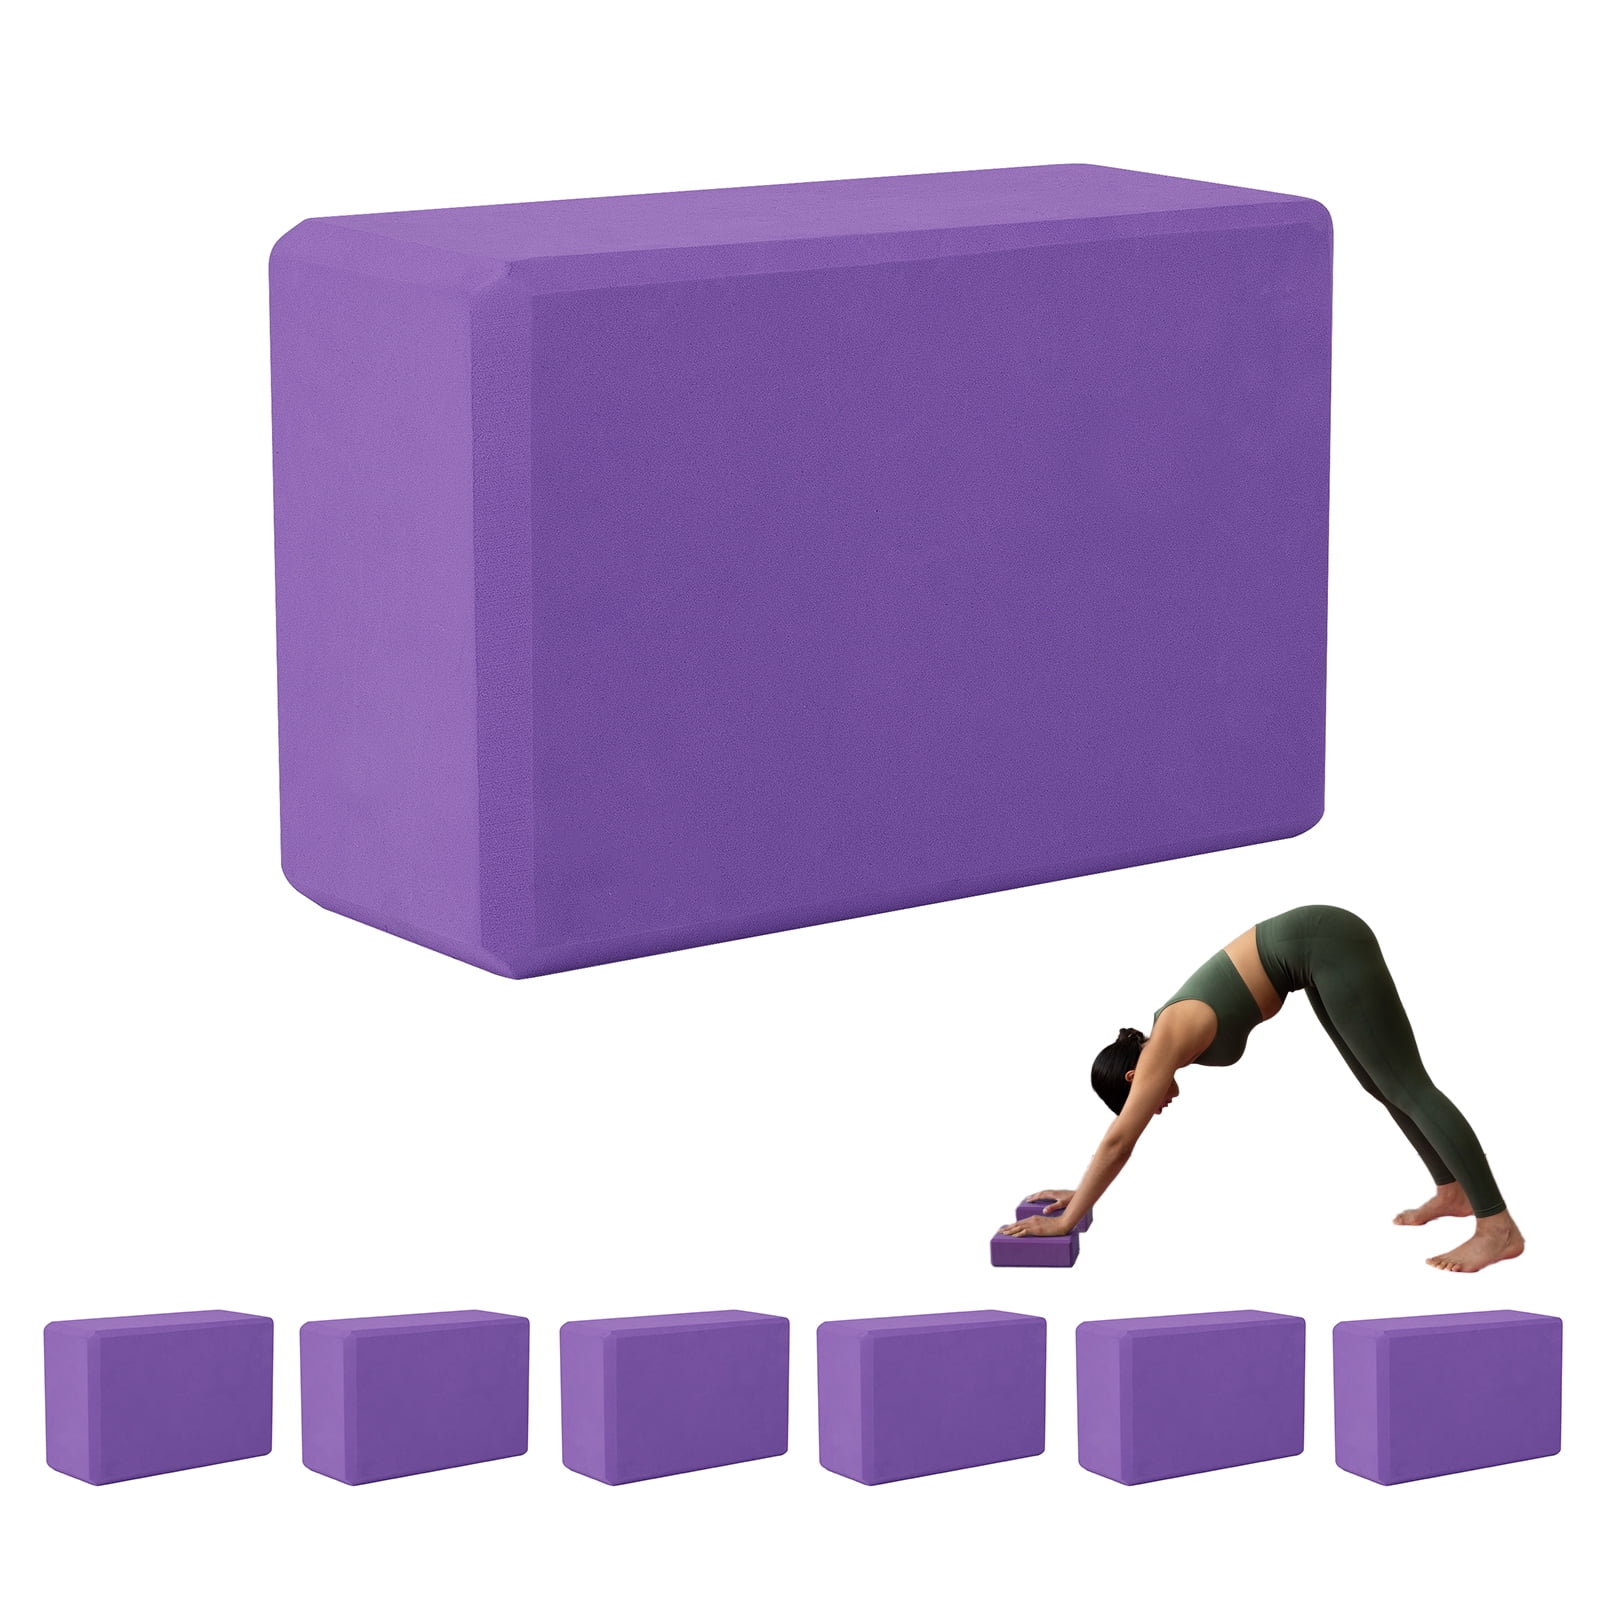  Peloton Yoga Block  Premium EVA Foam Yoga Blocks